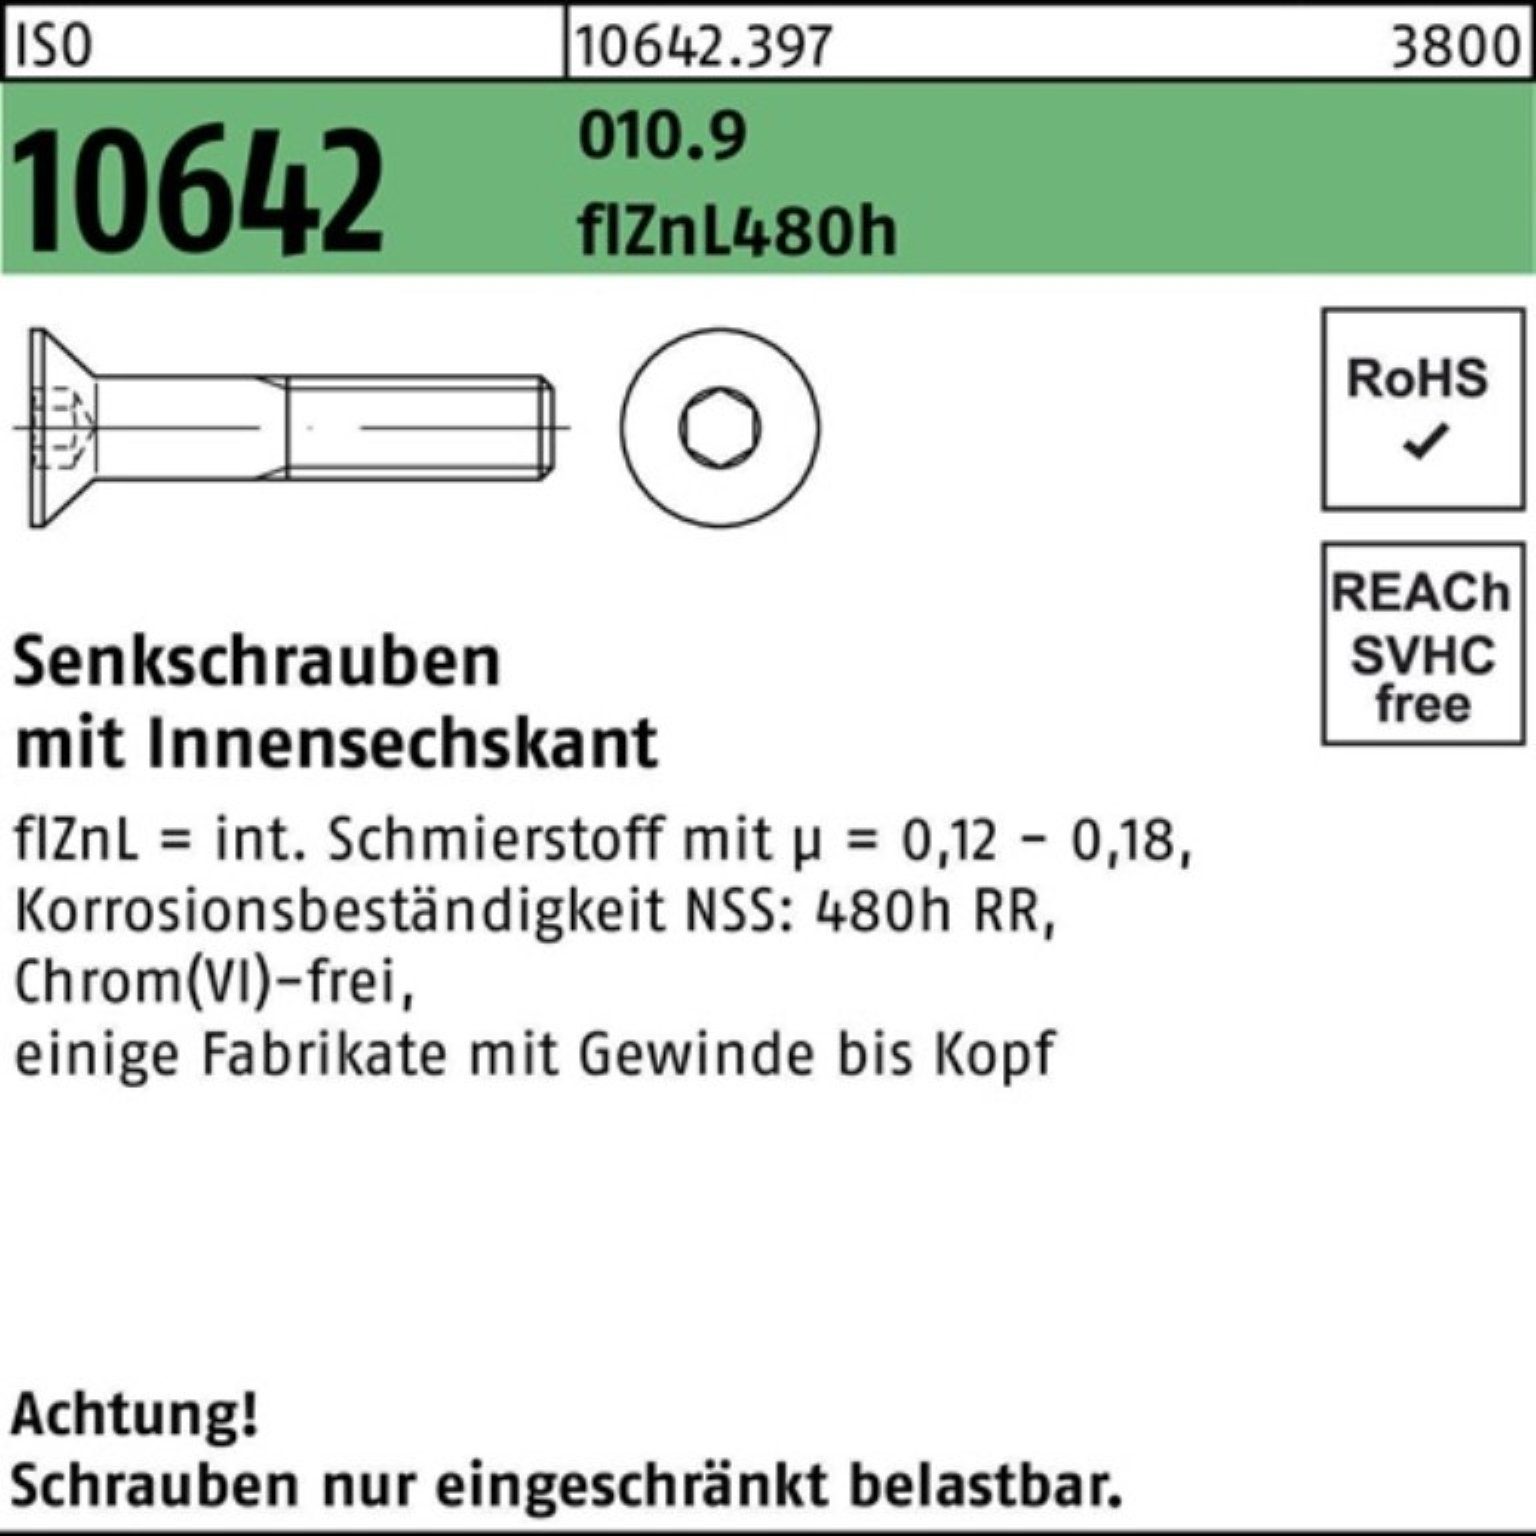 Reyher Senkschraube 200er Pack Senkschraube ISO 10642 Innen-6kt M8x25 010.9 flZnL 480h zin